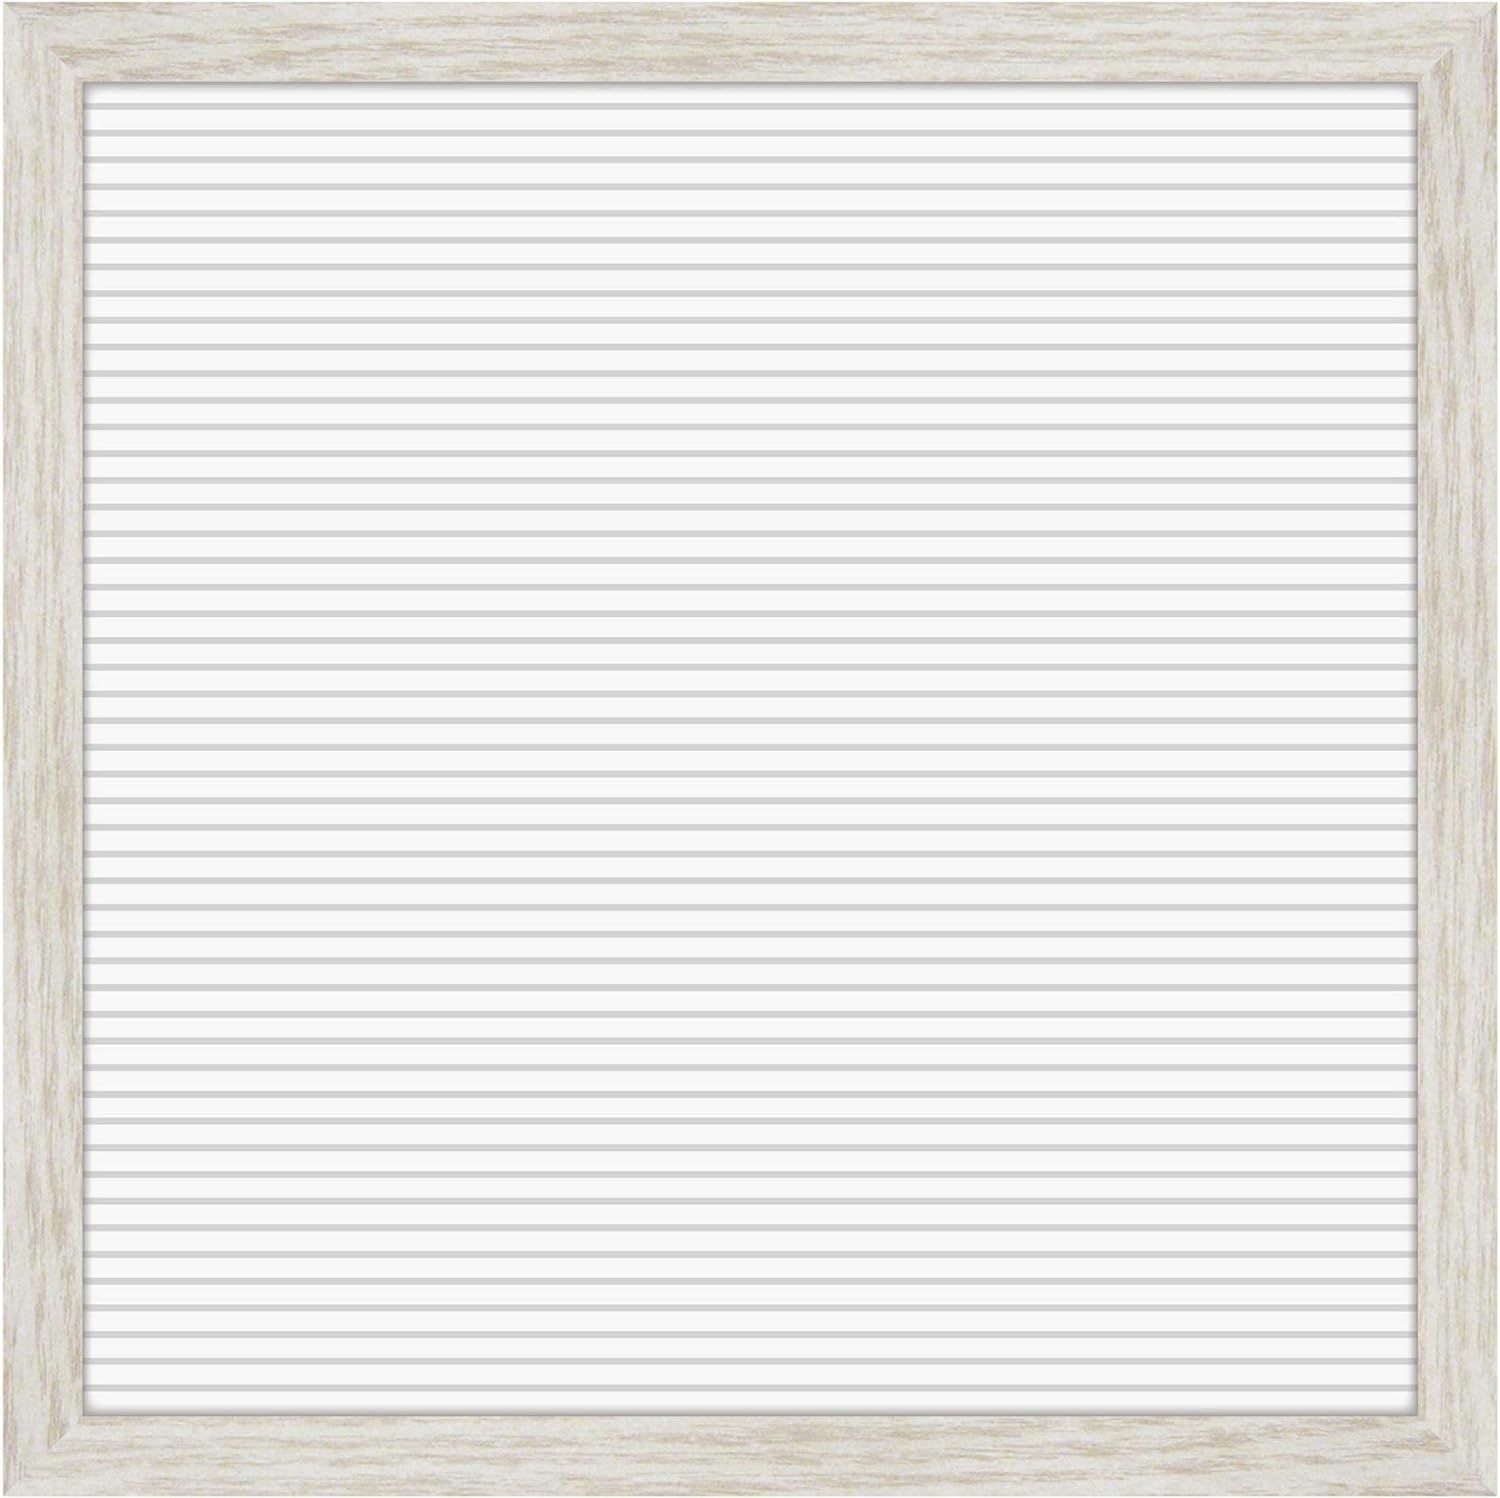 PRINZ Letterboard Letter Board, White | Amazon (US)